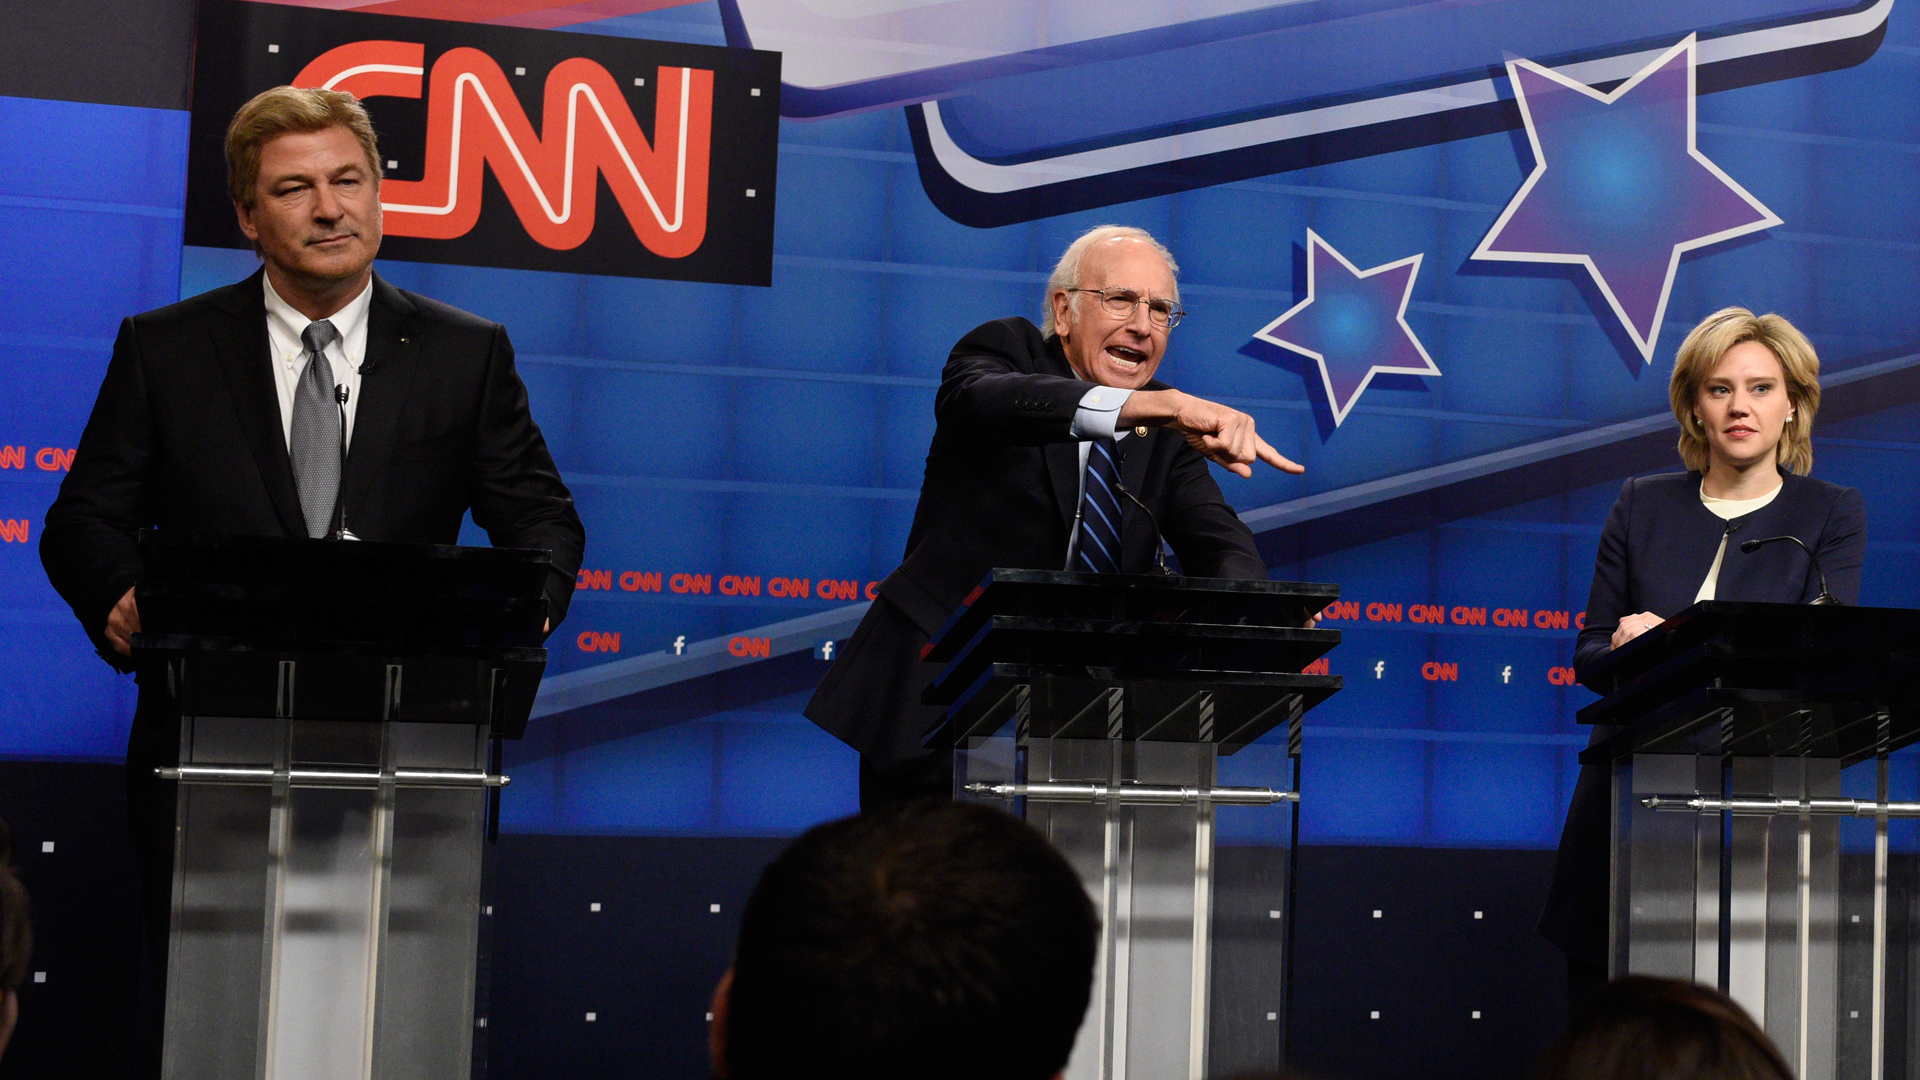 Watch Democratic Debate Cold Open From Saturday Night Live - NBC.com1920 x 1080